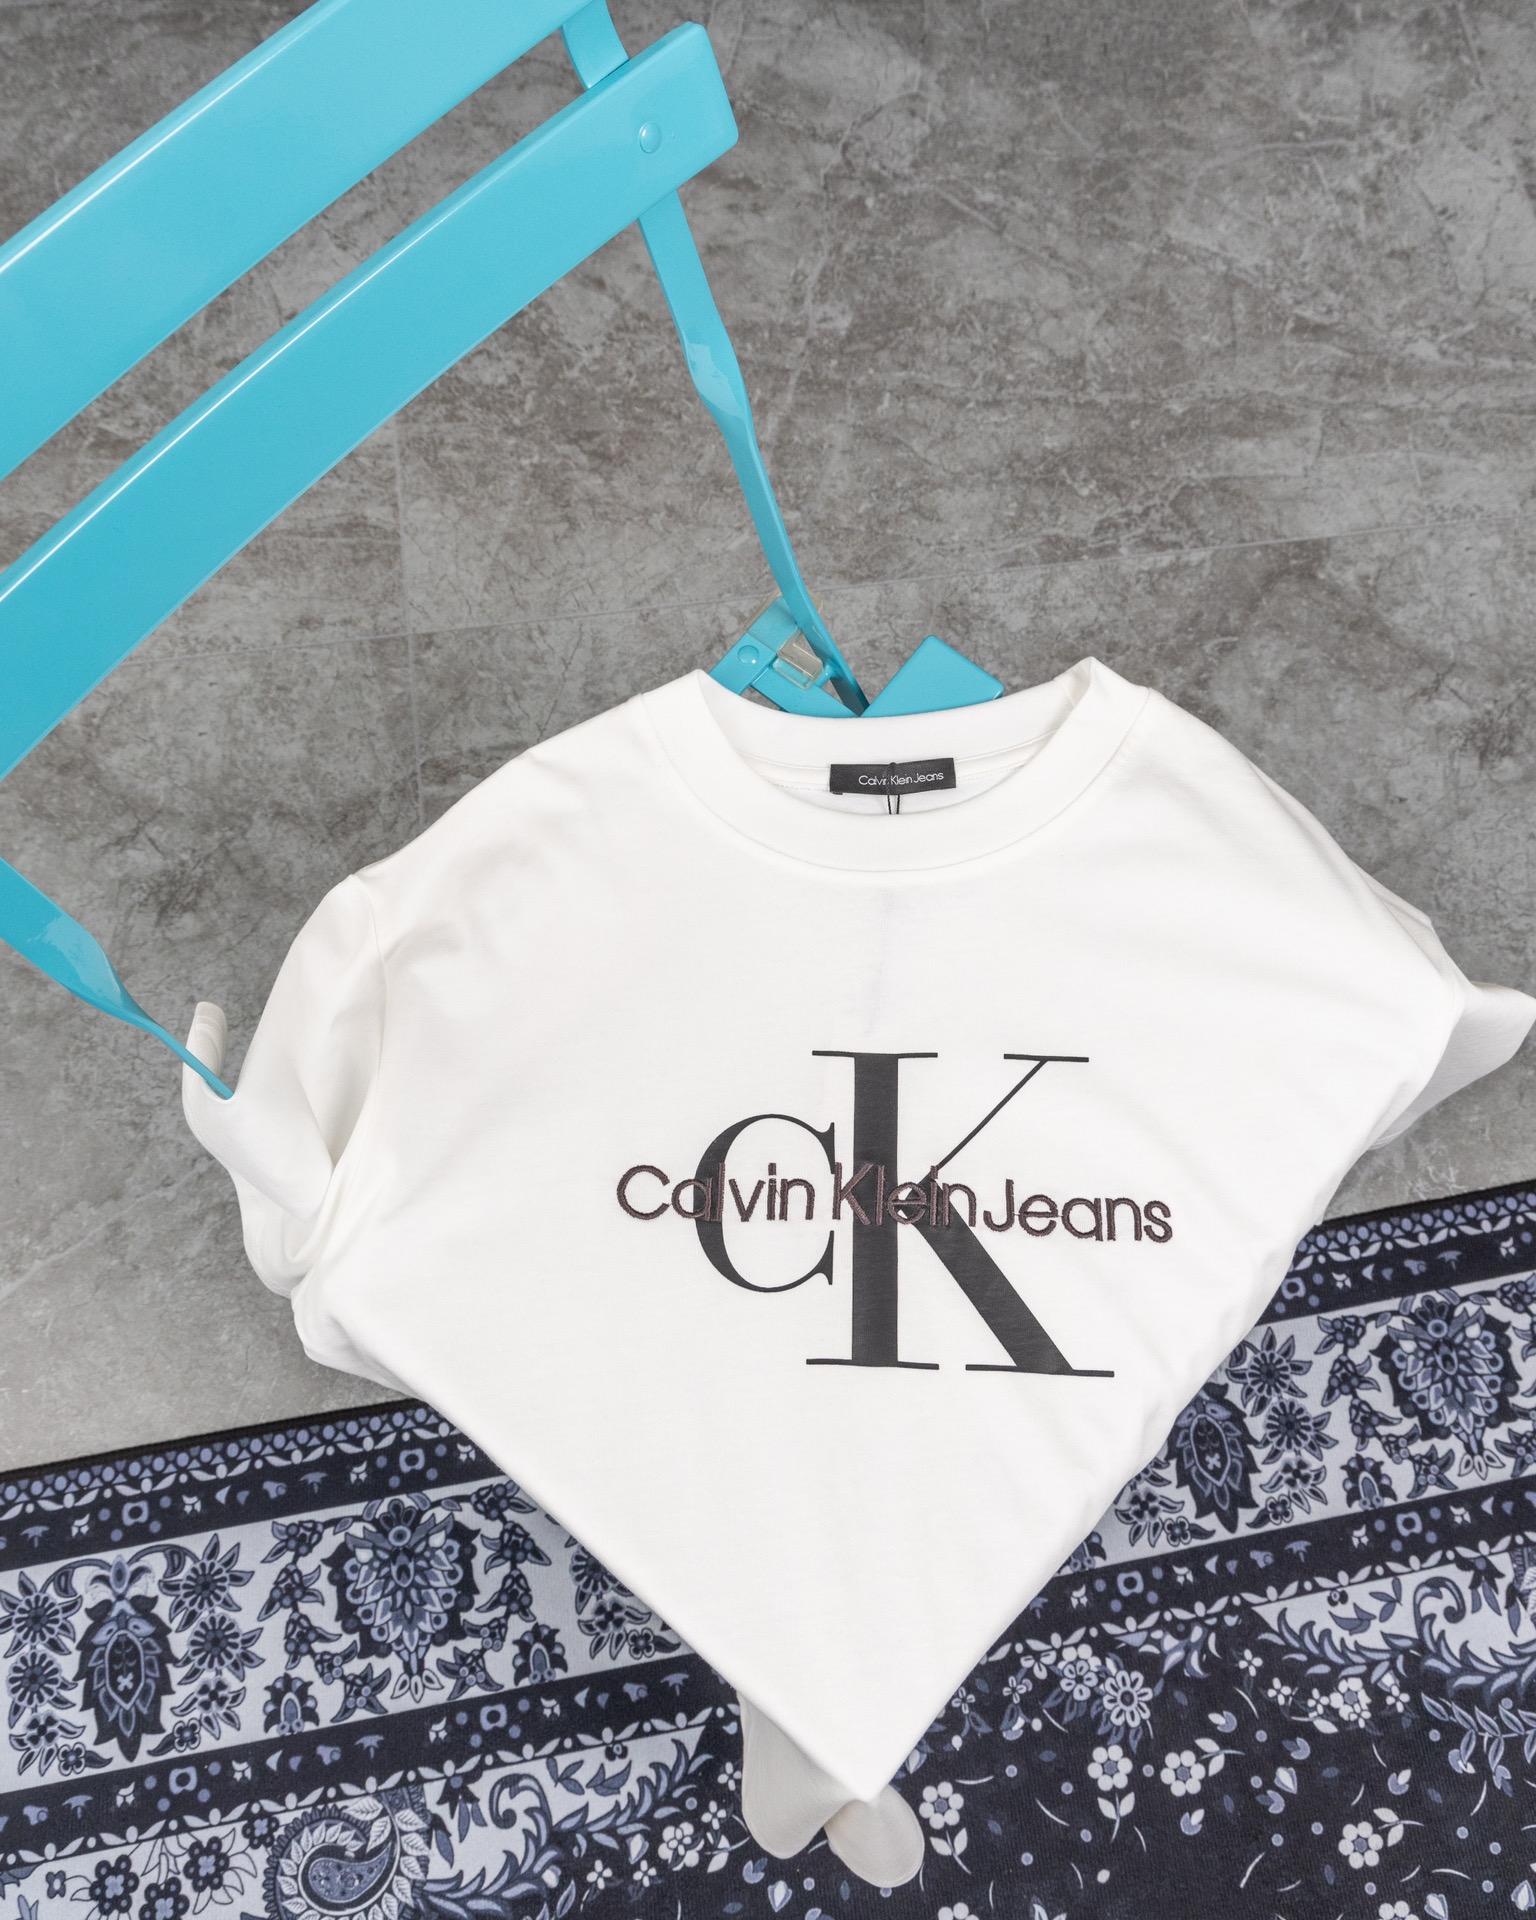 Calvin Klein Clothing T-Shirt Black White Embroidery Unisex Cotton Mercerized Silk Fashion Short Sleeve